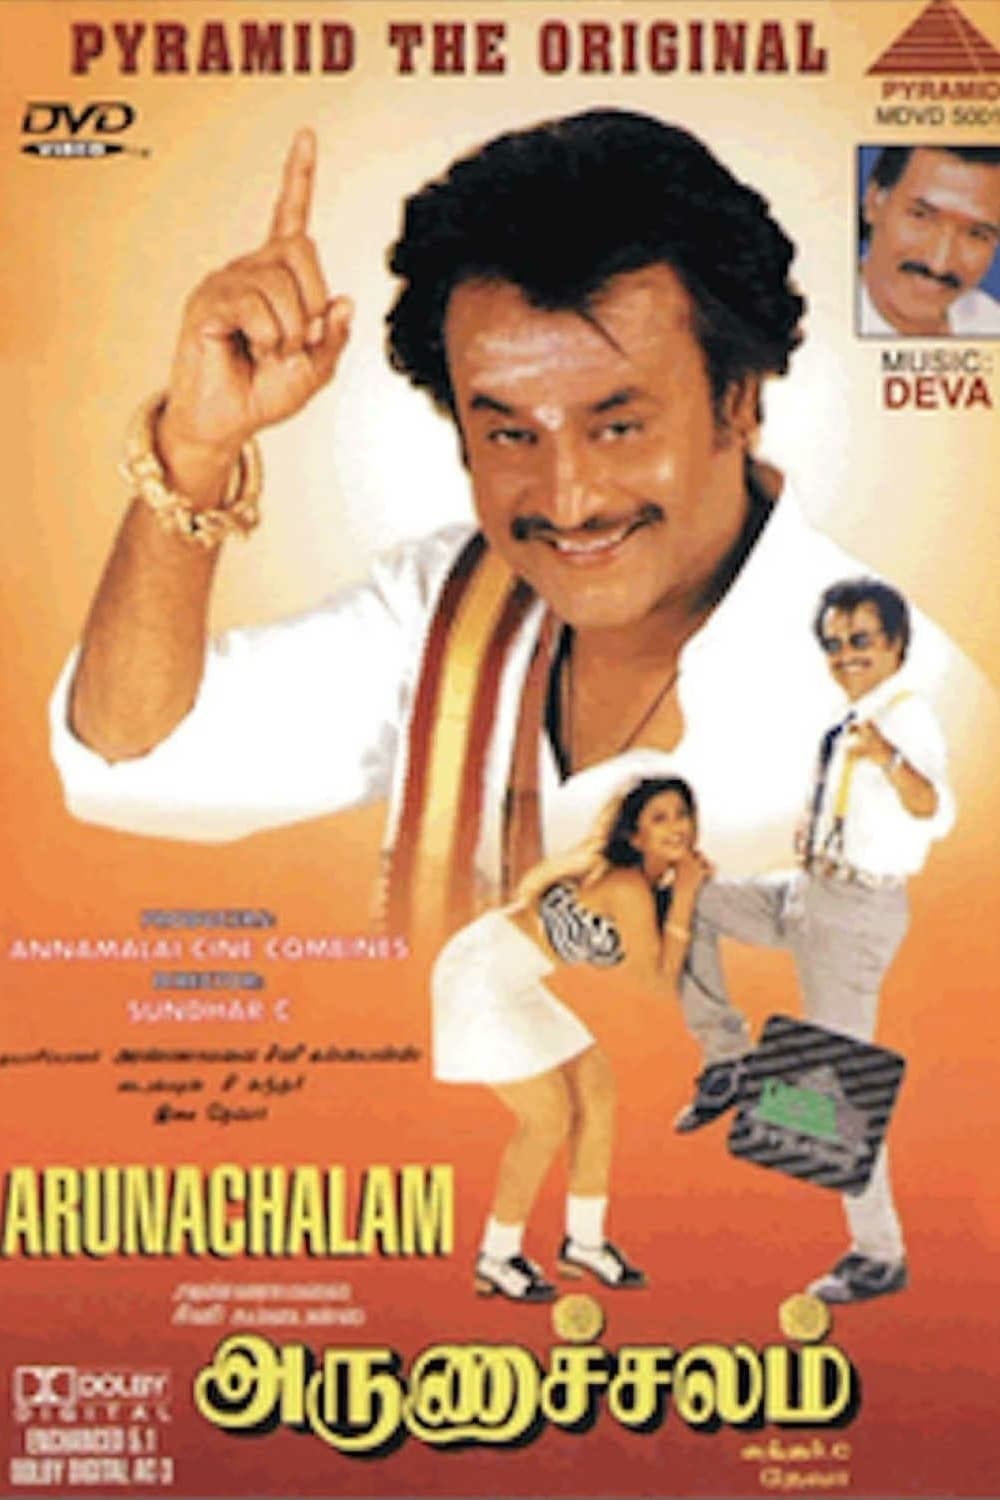 Poster for the movie "Arunachalam"